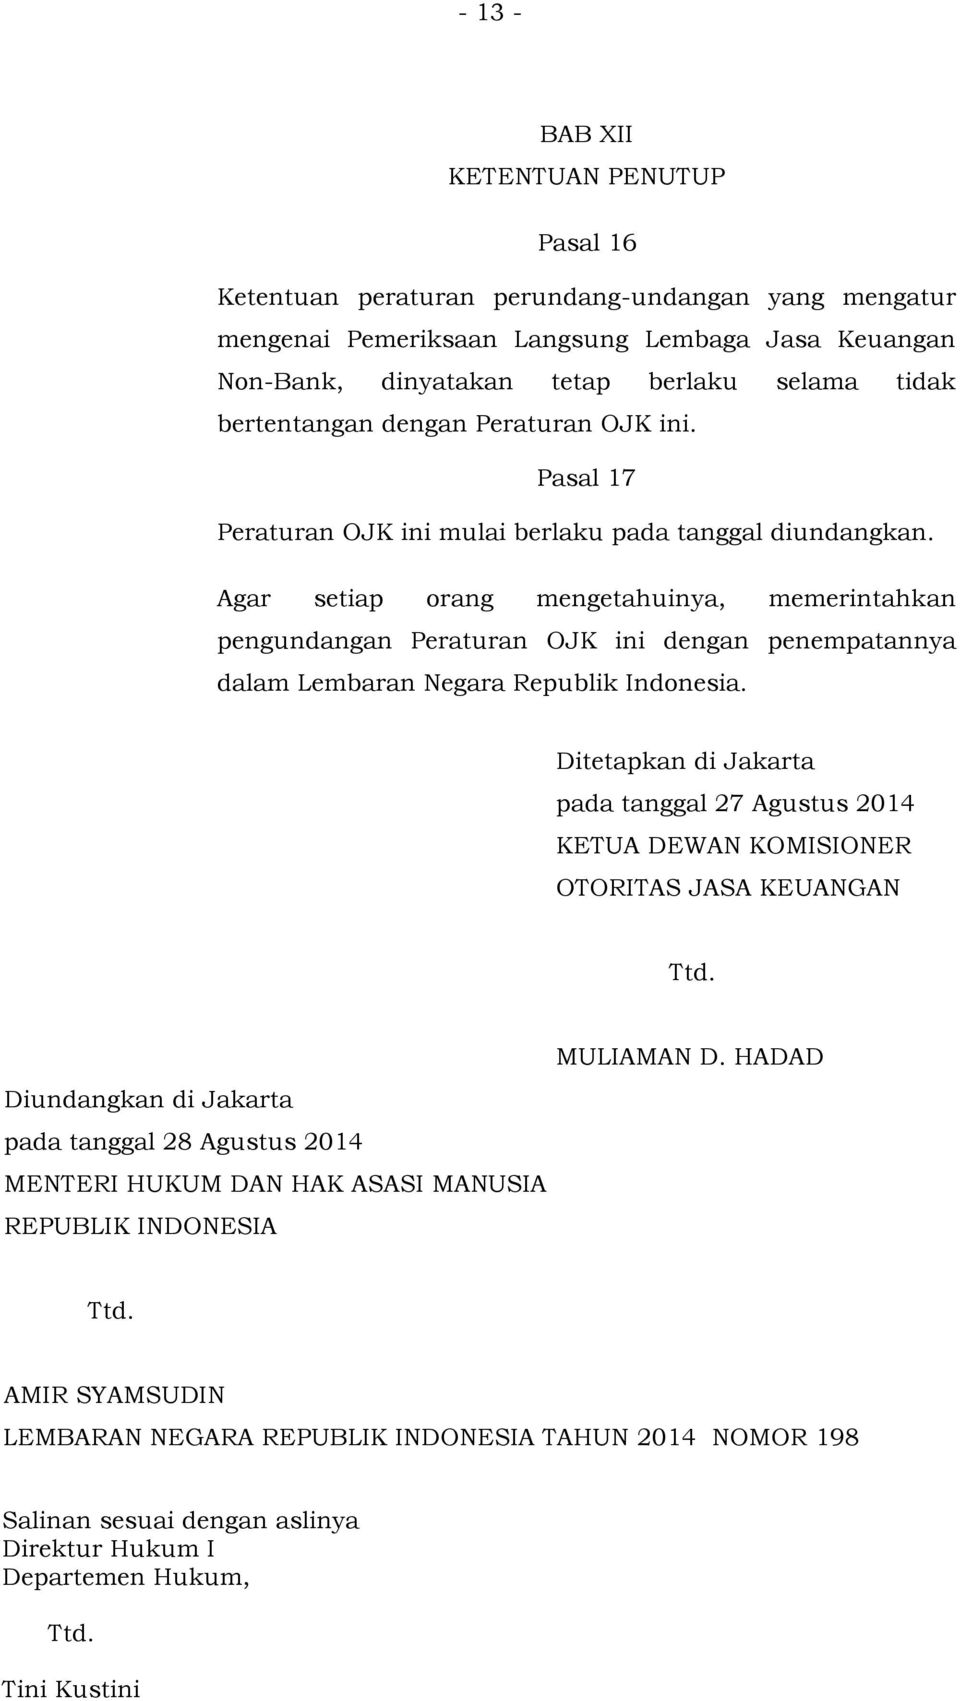 Agar setiap orang mengetahuinya, memerintahkan pengundangan Peraturan OJK ini dengan penempatannya dalam Lembaran Negara Republik Indonesia.